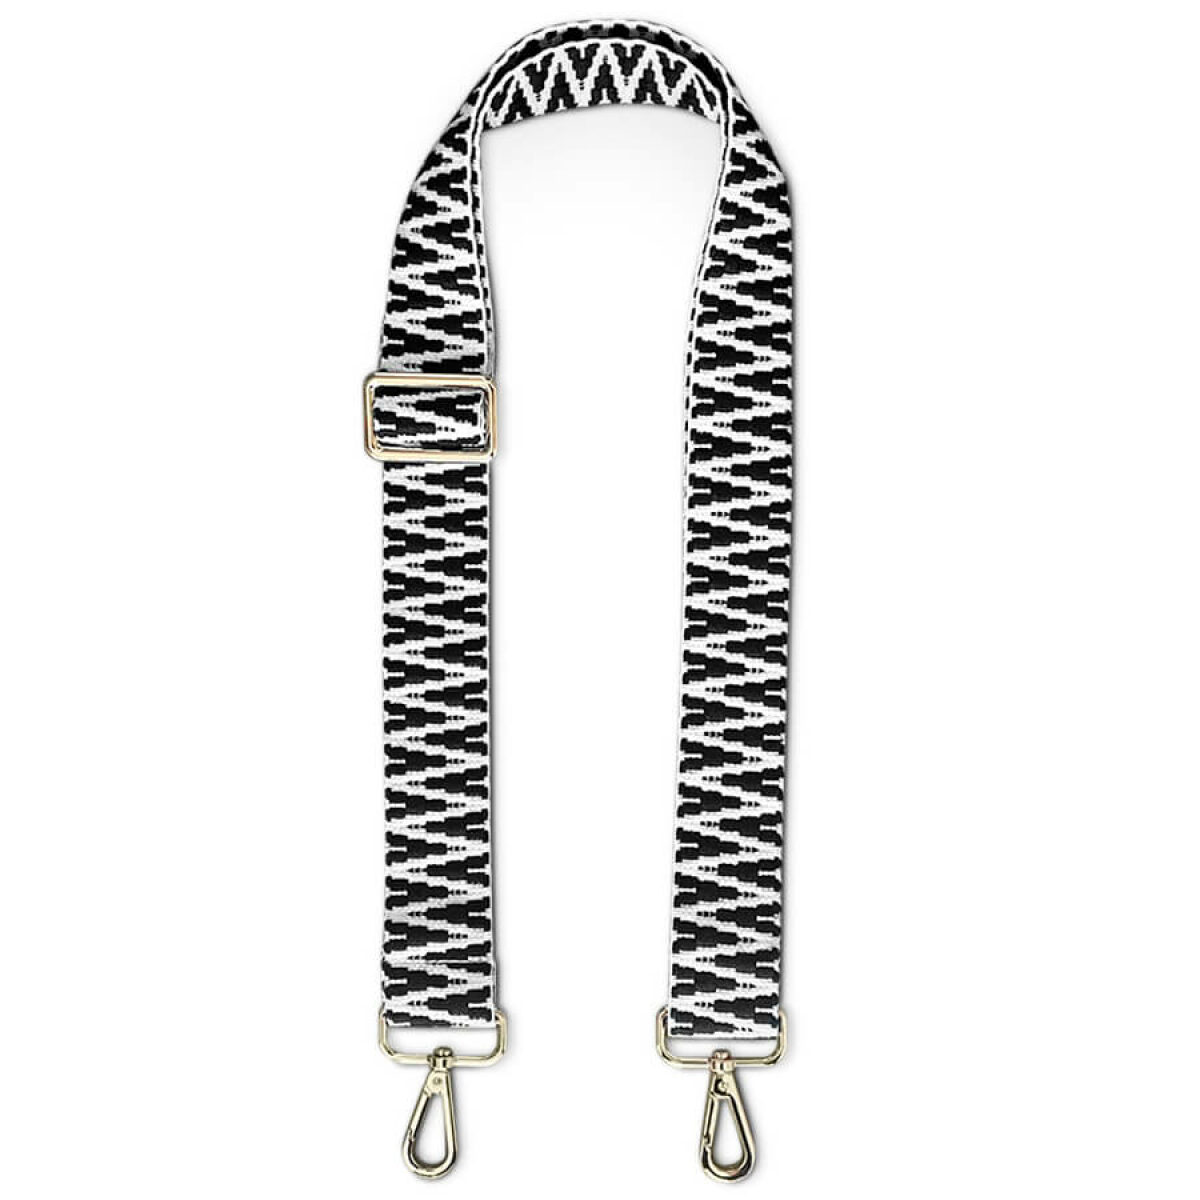 Interchangeable strap for dog treat bag in black/white